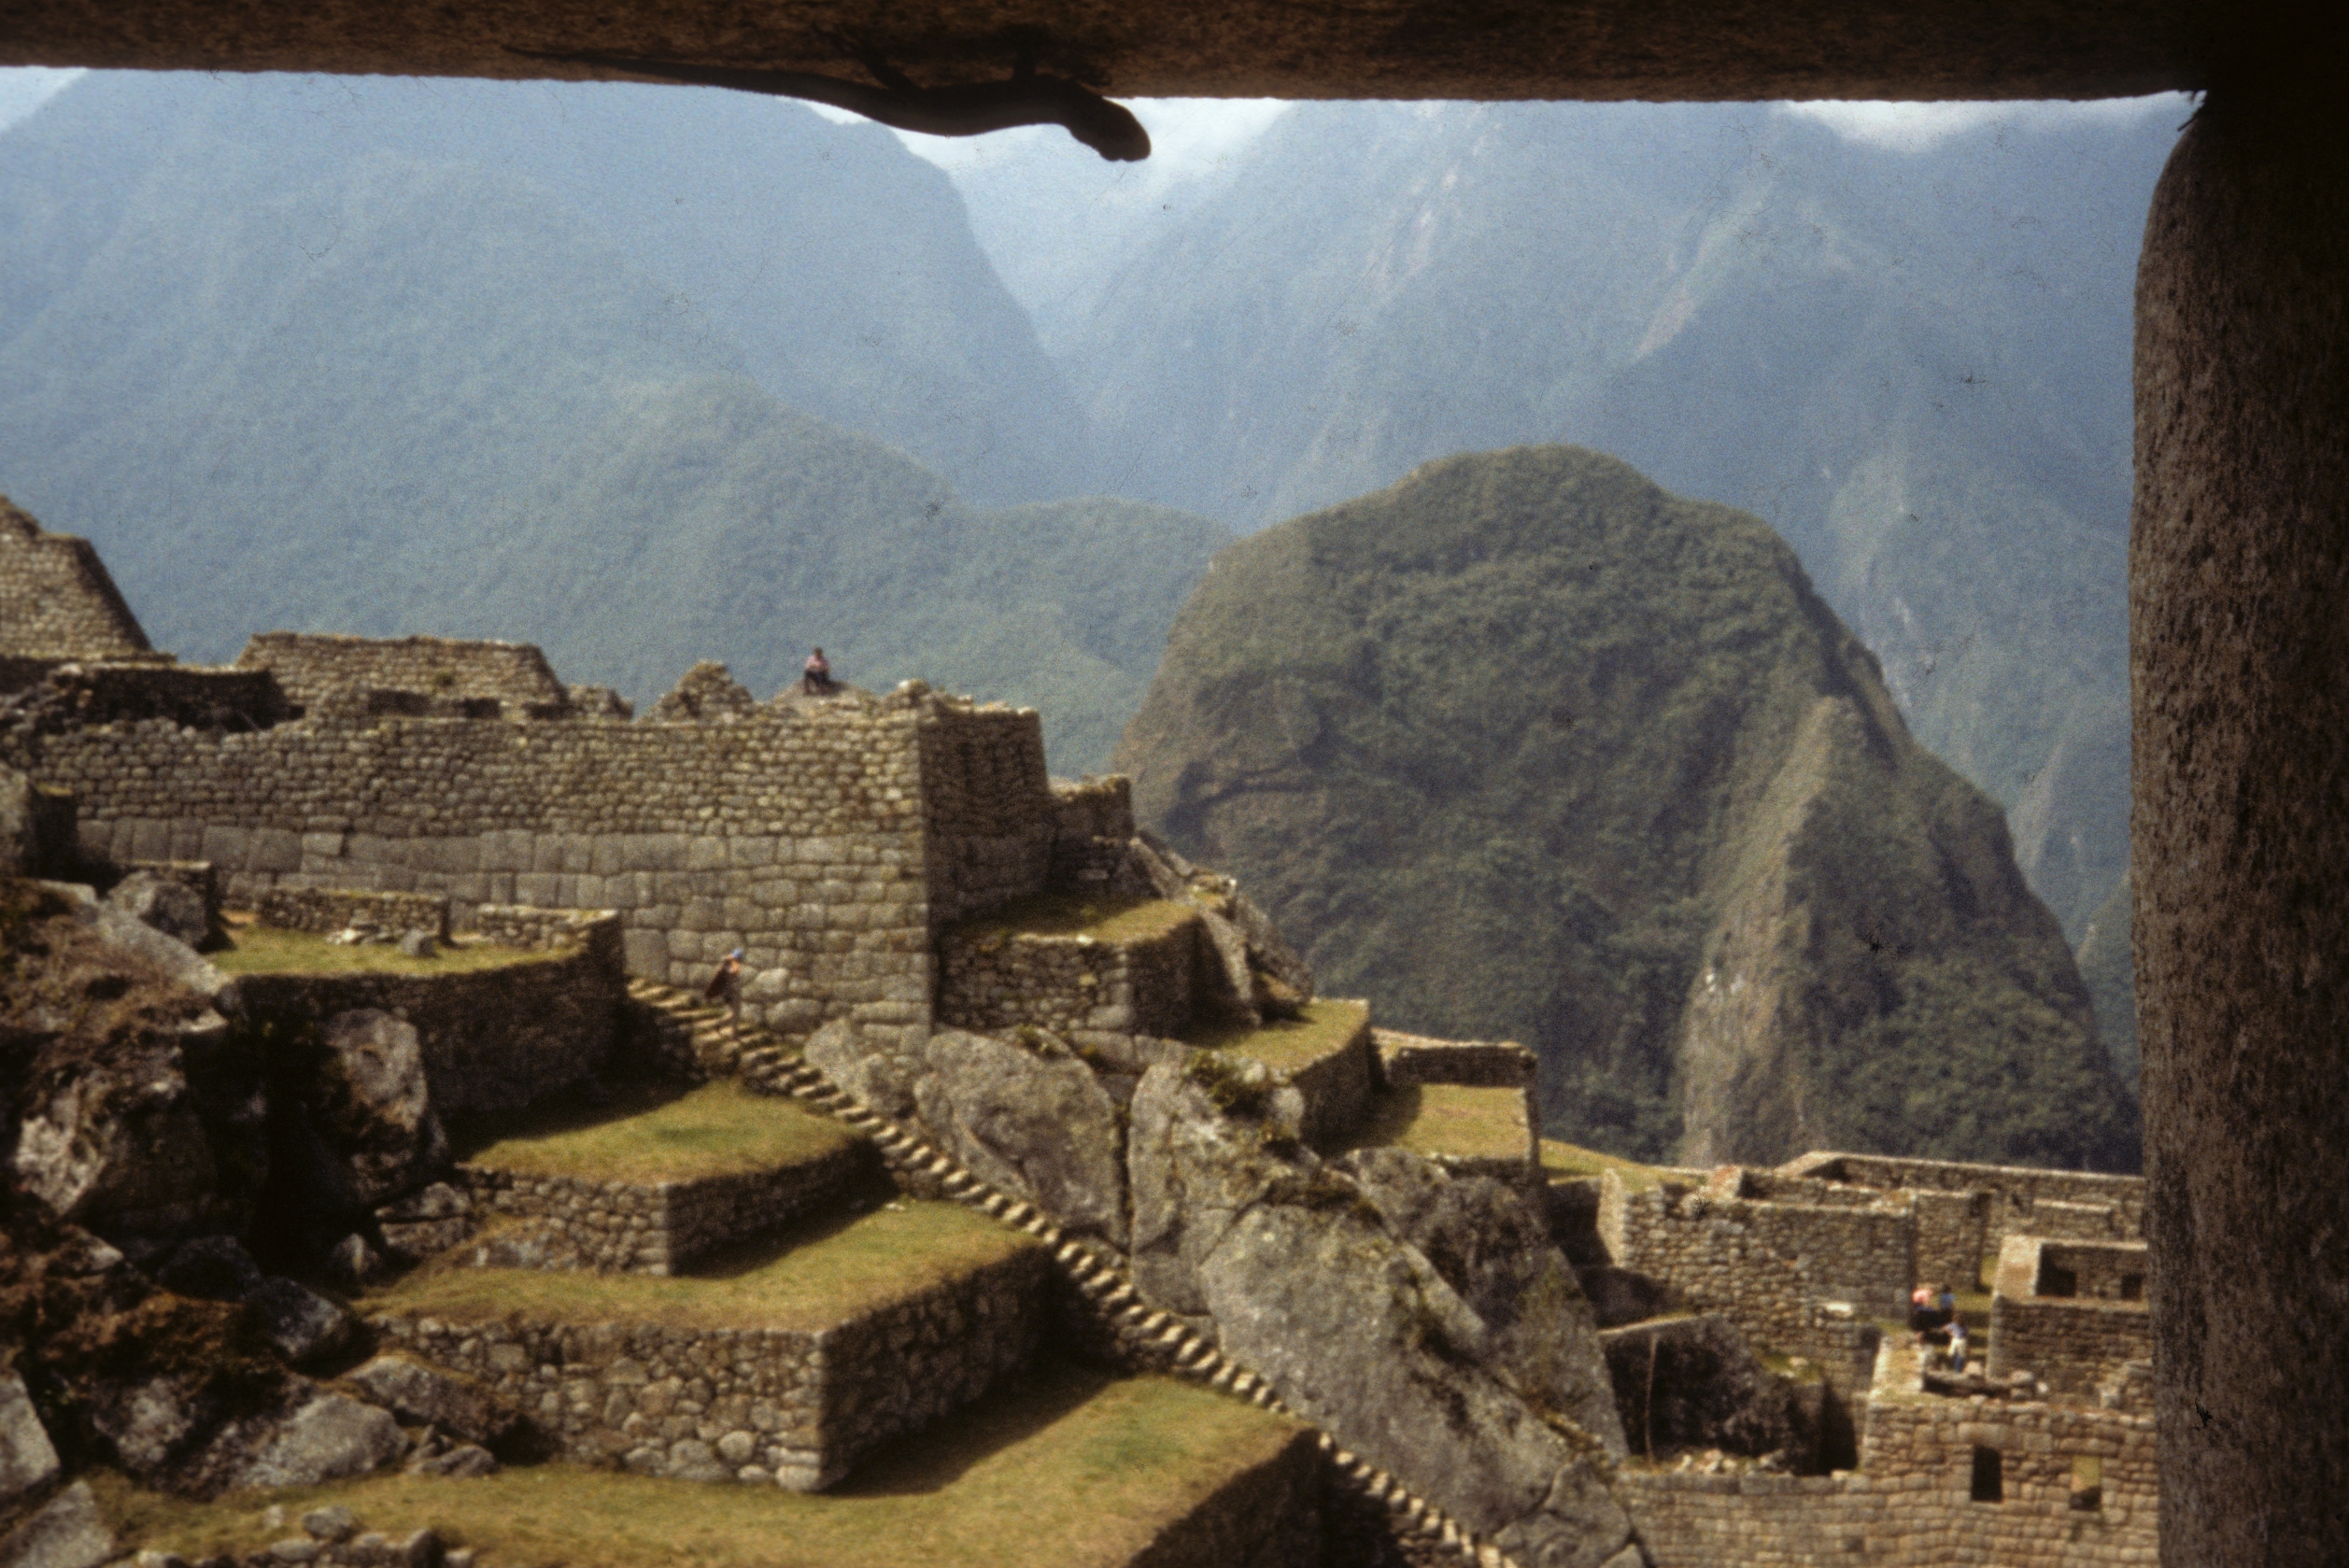 Machu Picchu (see the lizzard?)